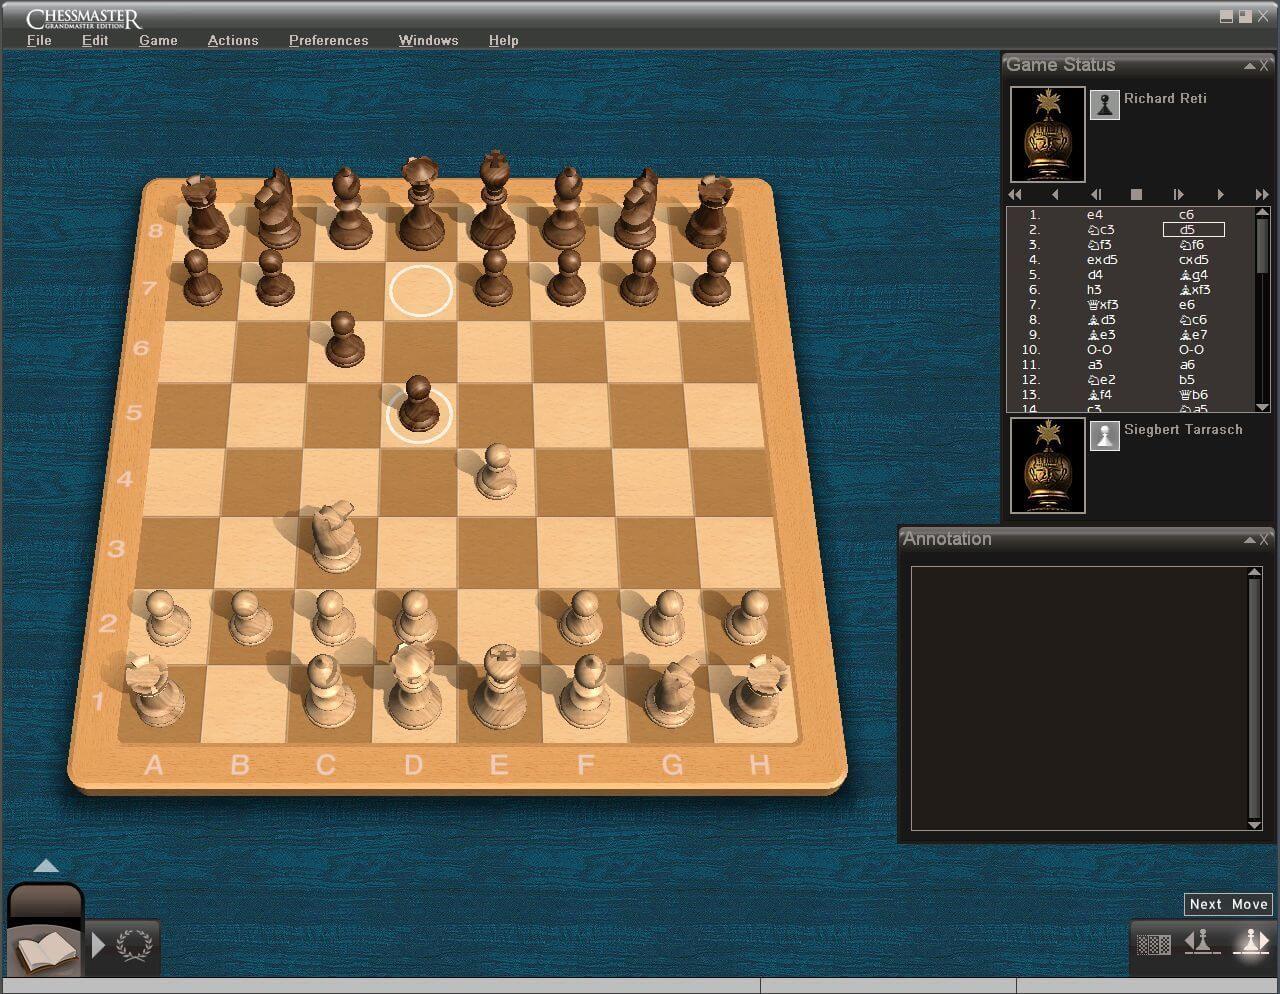 Chessmaster 8000 (2000) - MobyGames